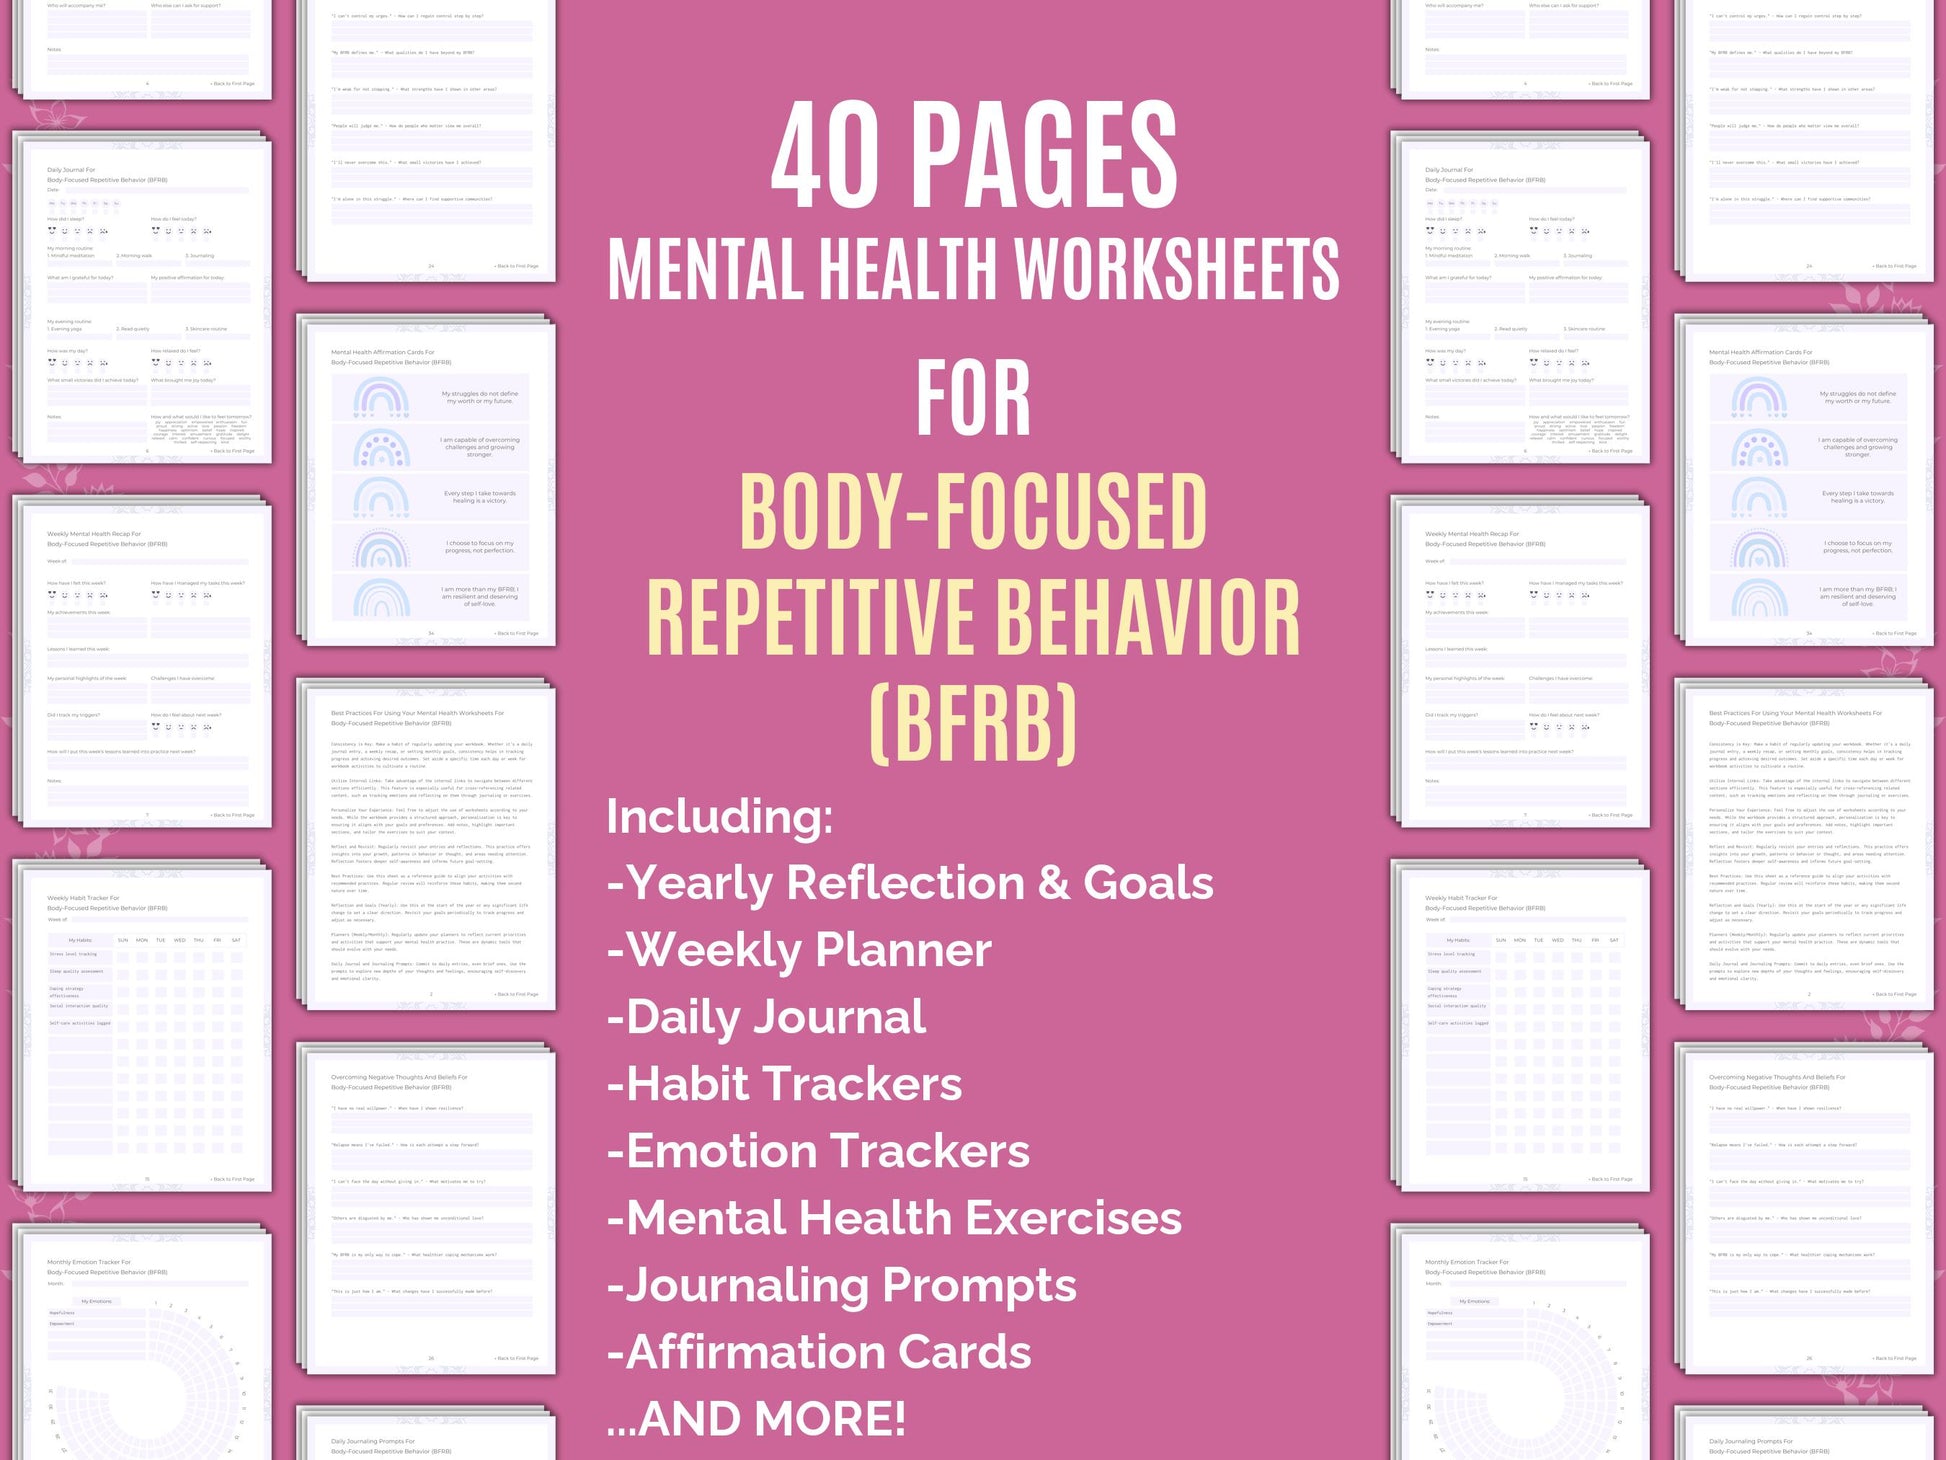 BFRB Workbooks, BFRB Notes, BFRB Templates, BFRB Counseling, BFRB Journaling, BFRB Goal Setting, BFRB Mental Health, BFRB Journals, Repetitive, BFRB Planners, BFRB Therapy, Behavior, BFRB Tools, Body-Focused, BFRB Resources, BFRB Cheat Sheet